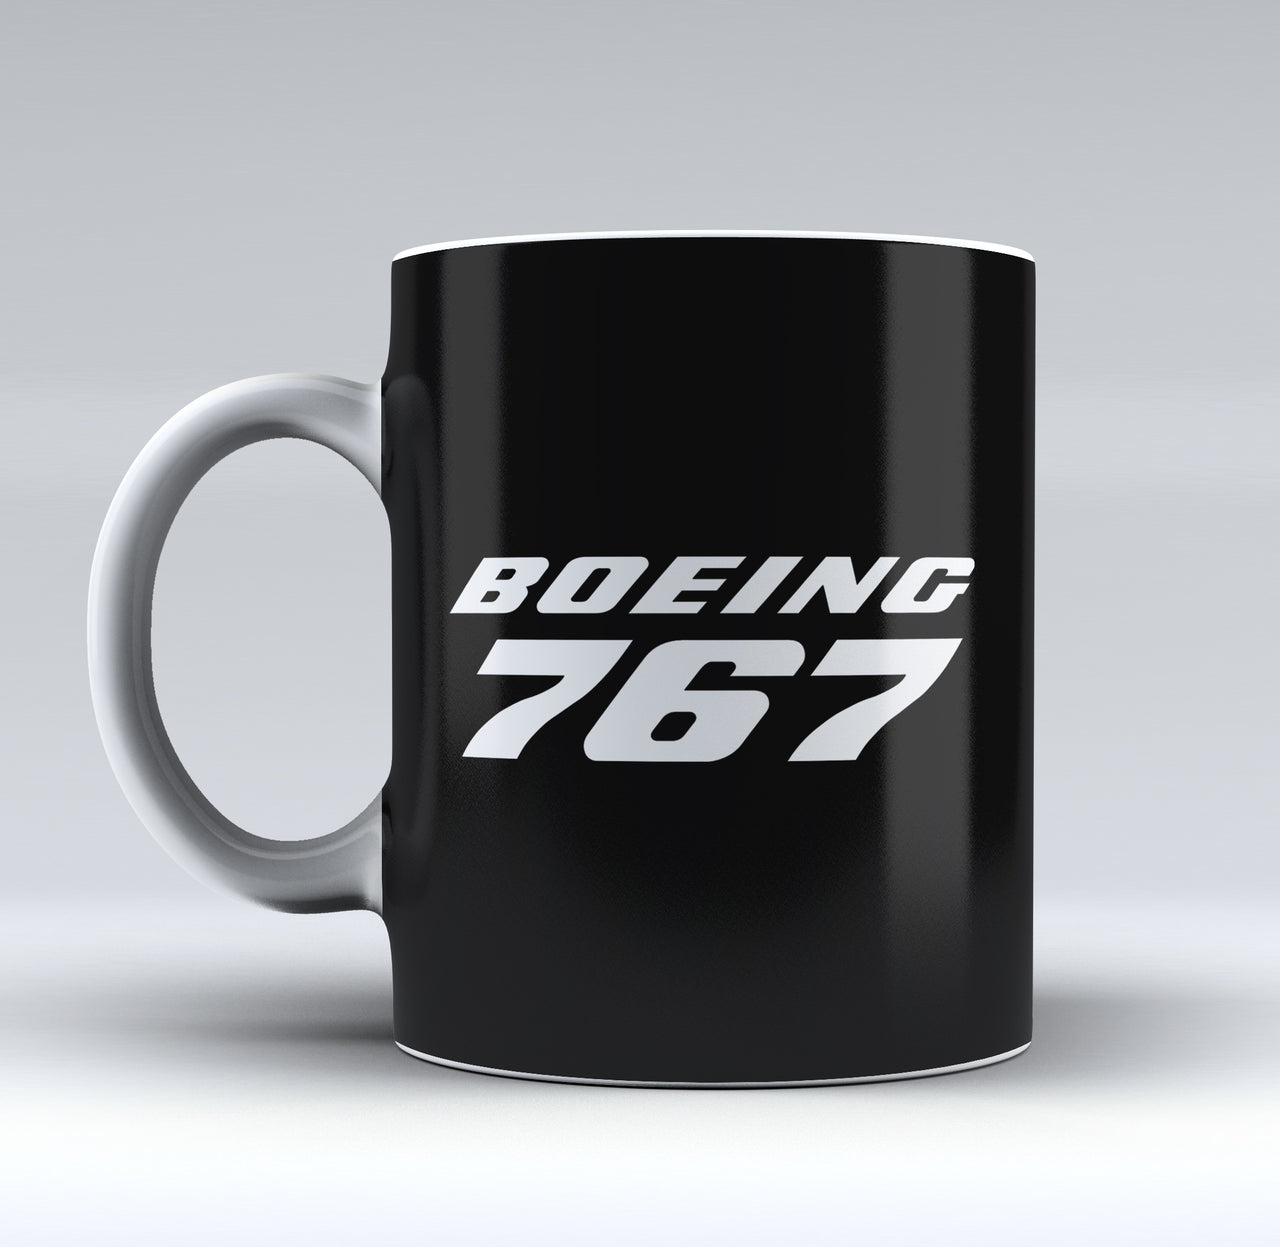 Boeing 767 & Text Designed Mugs